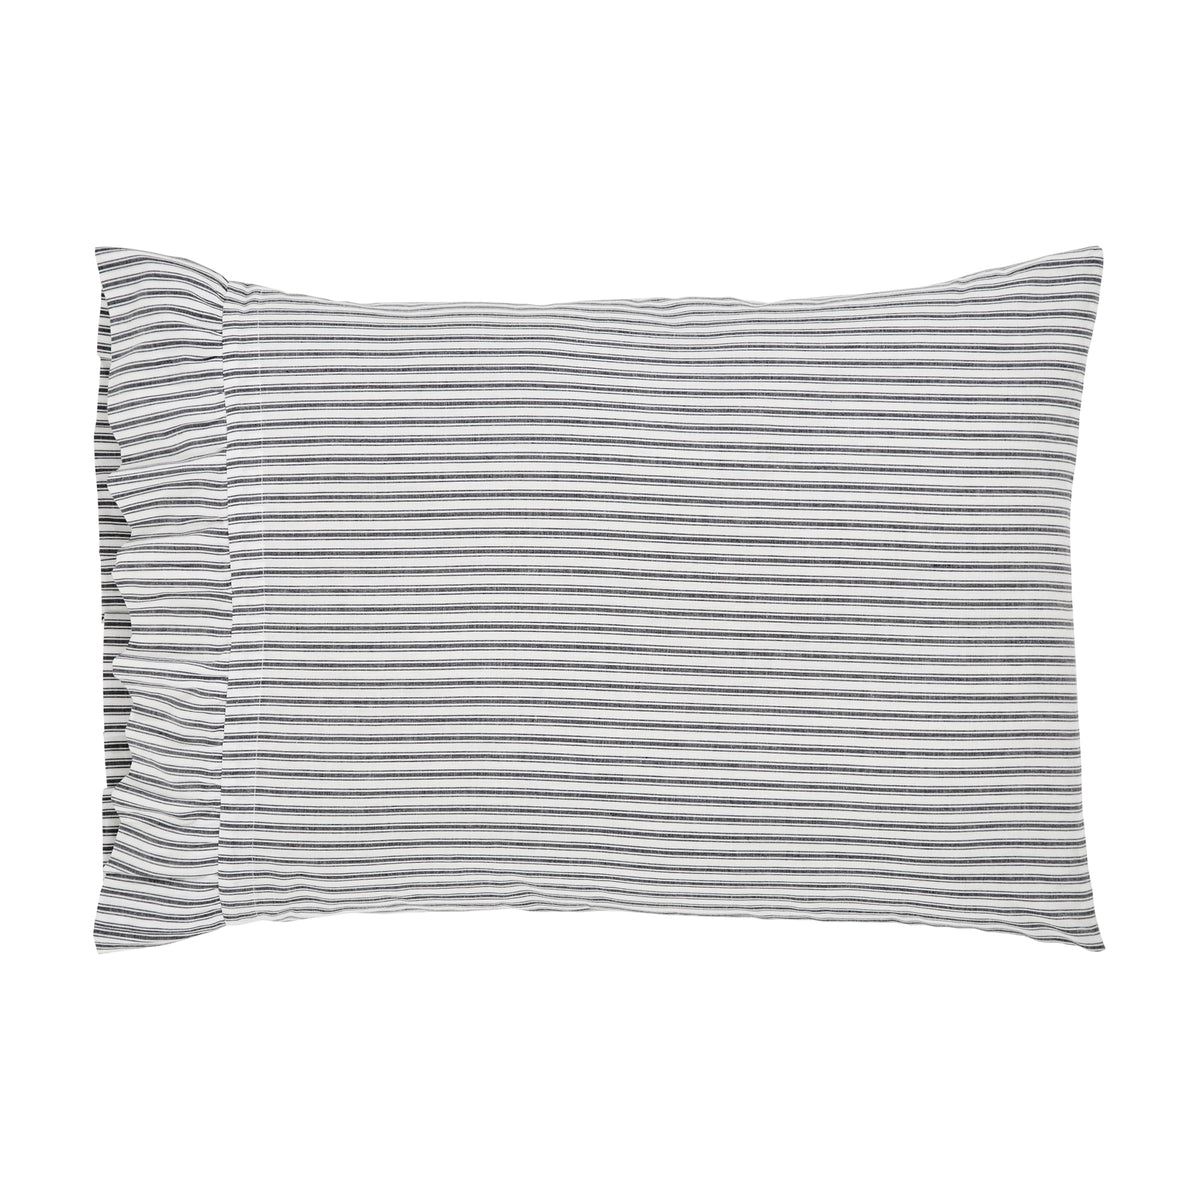 Sawyer Mill Black Ruffled Ticking Stripe Standard Pillow Case Set of 2 21x26+4